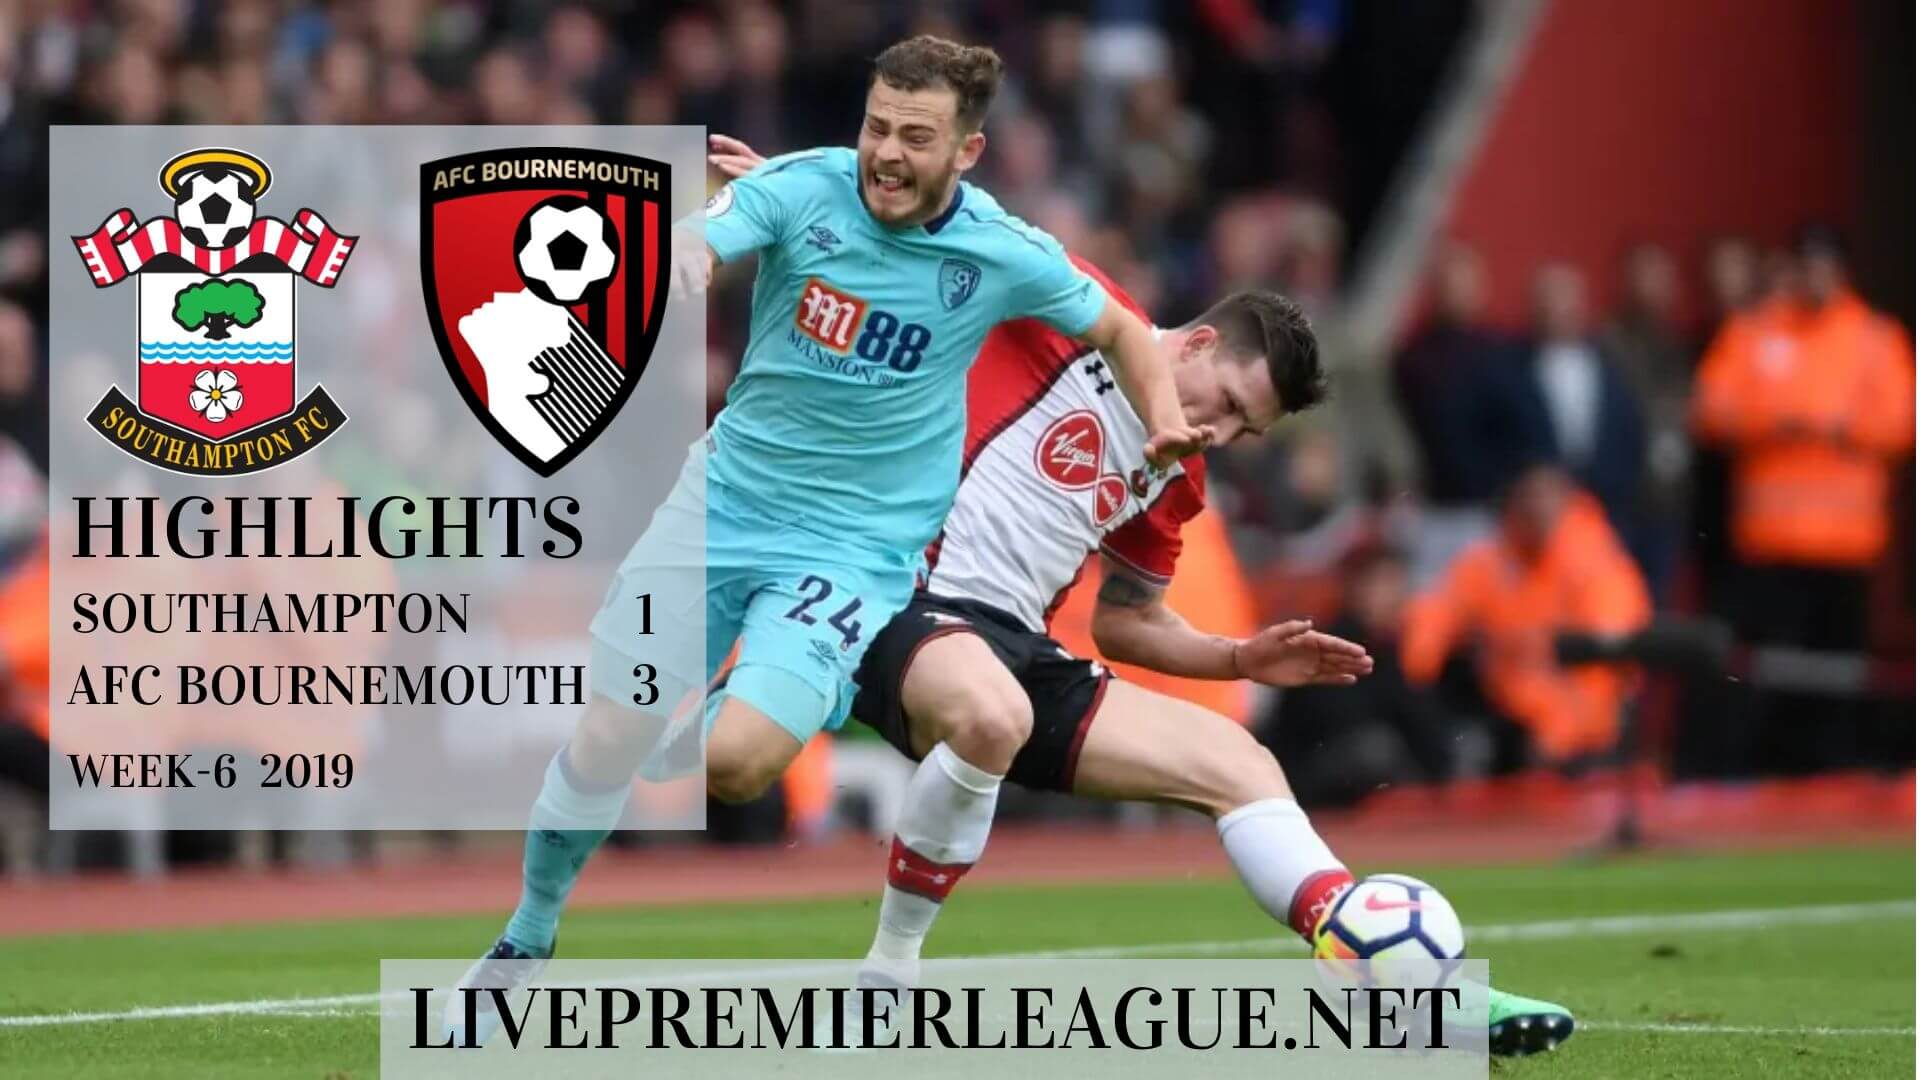 Southampton vs AFC Bournemouth Highlights 2019 EPL Week 6